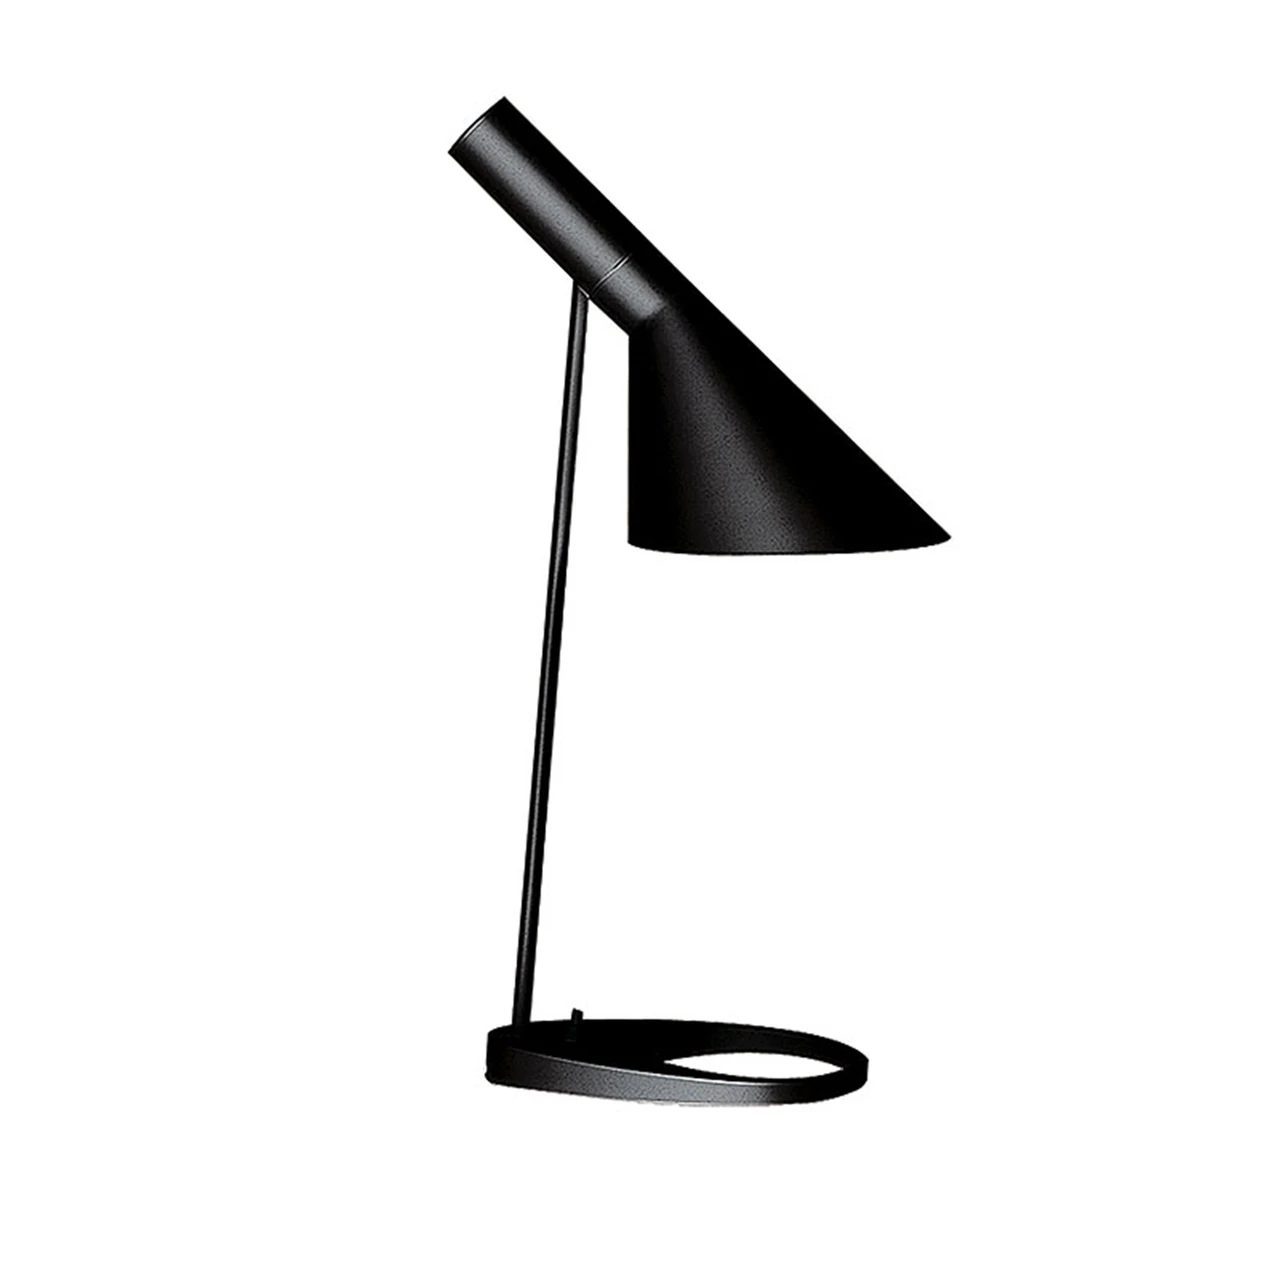 renhed eksegese Eddike AJ Table Lamps – Classic and elegant lighting | Read more here